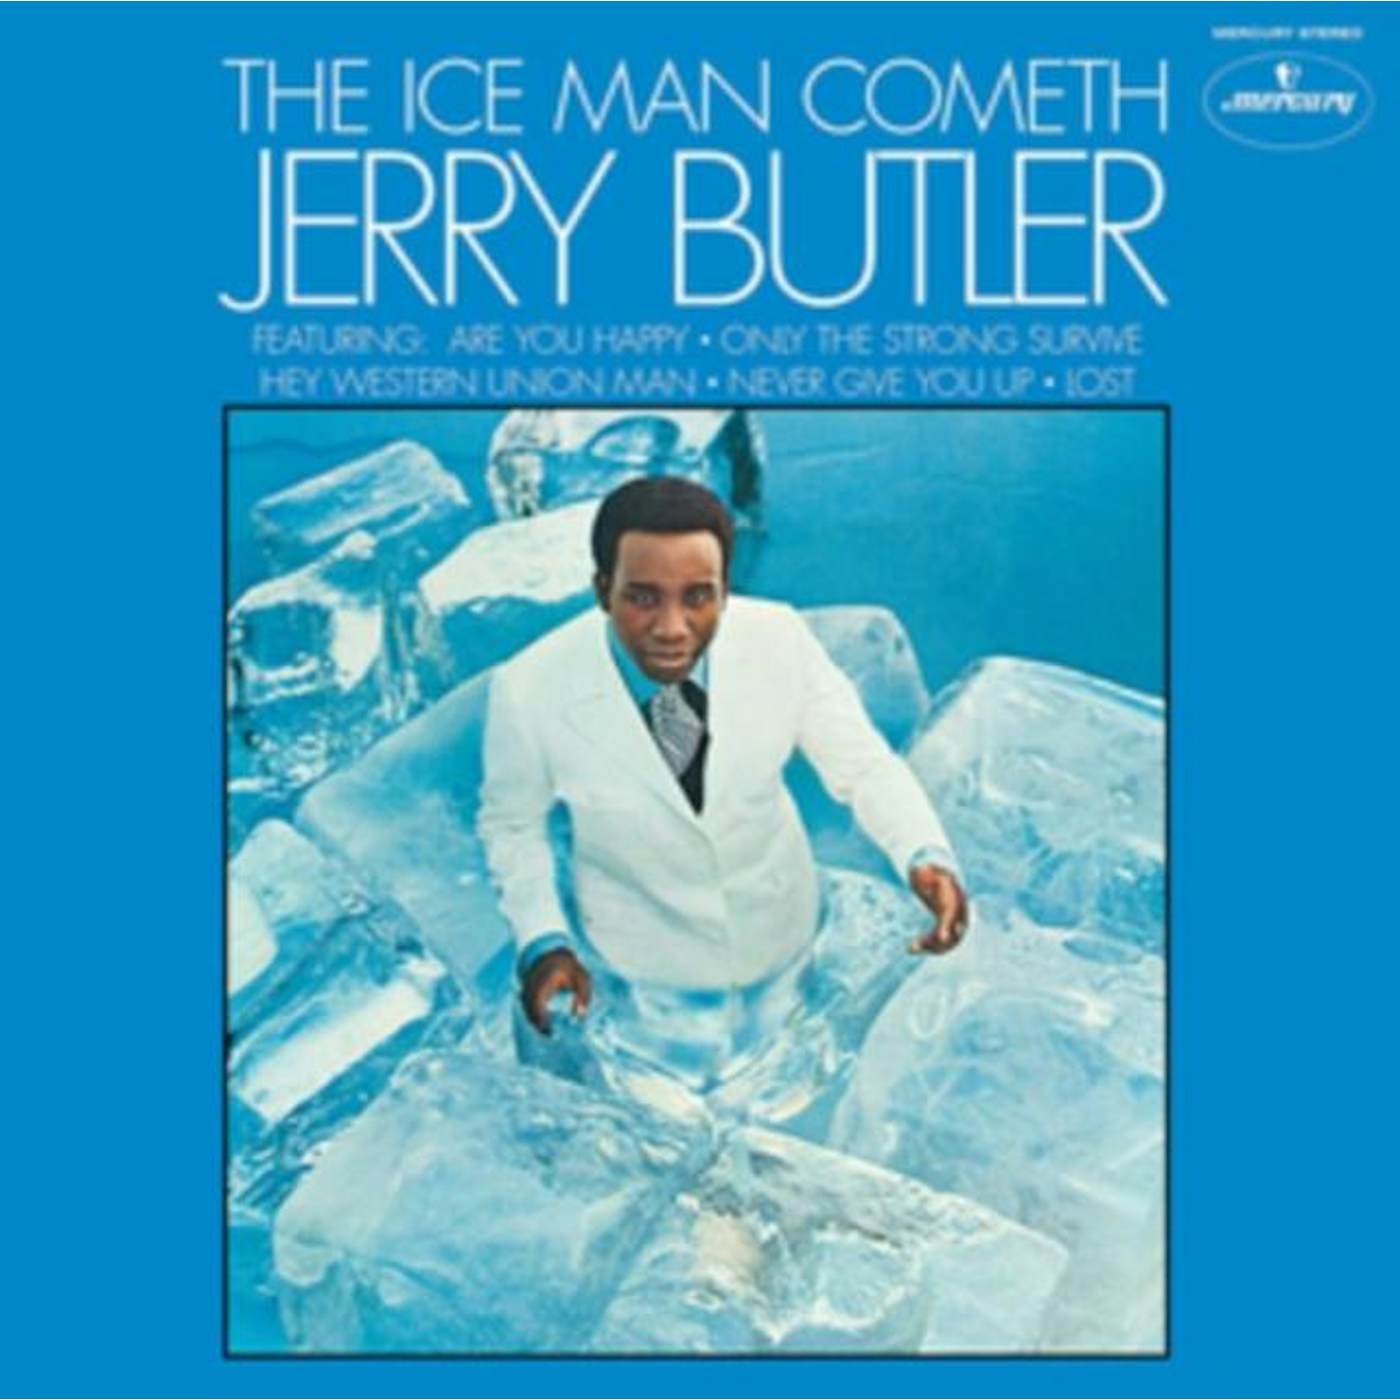 Jerry Butler LP Vinyl Record - The Iceman Cometh